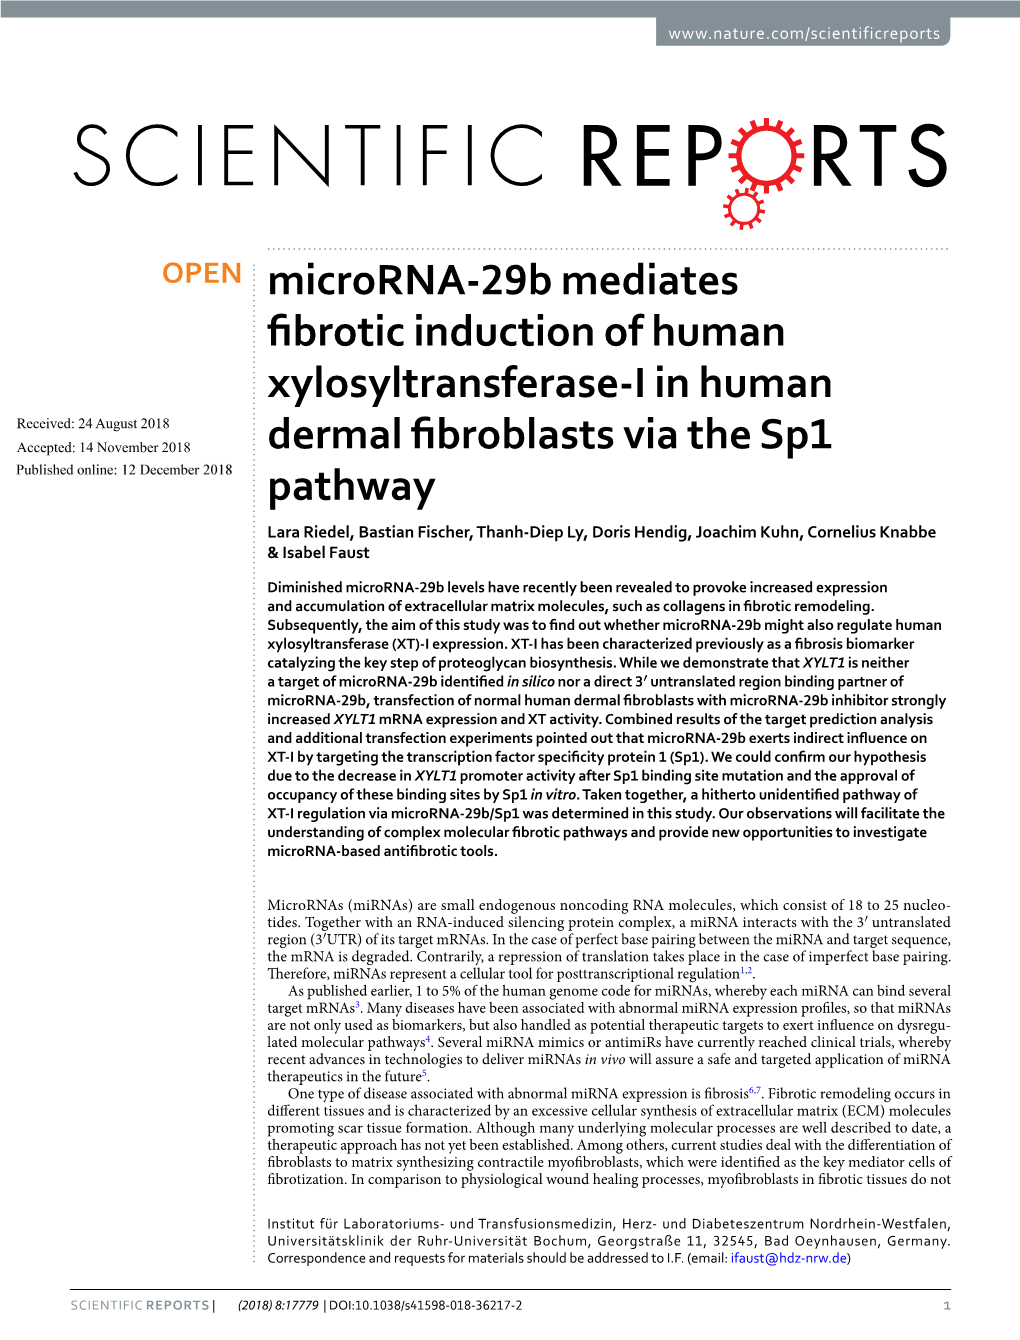 Microrna-29B Mediates Fibrotic Induction of Human